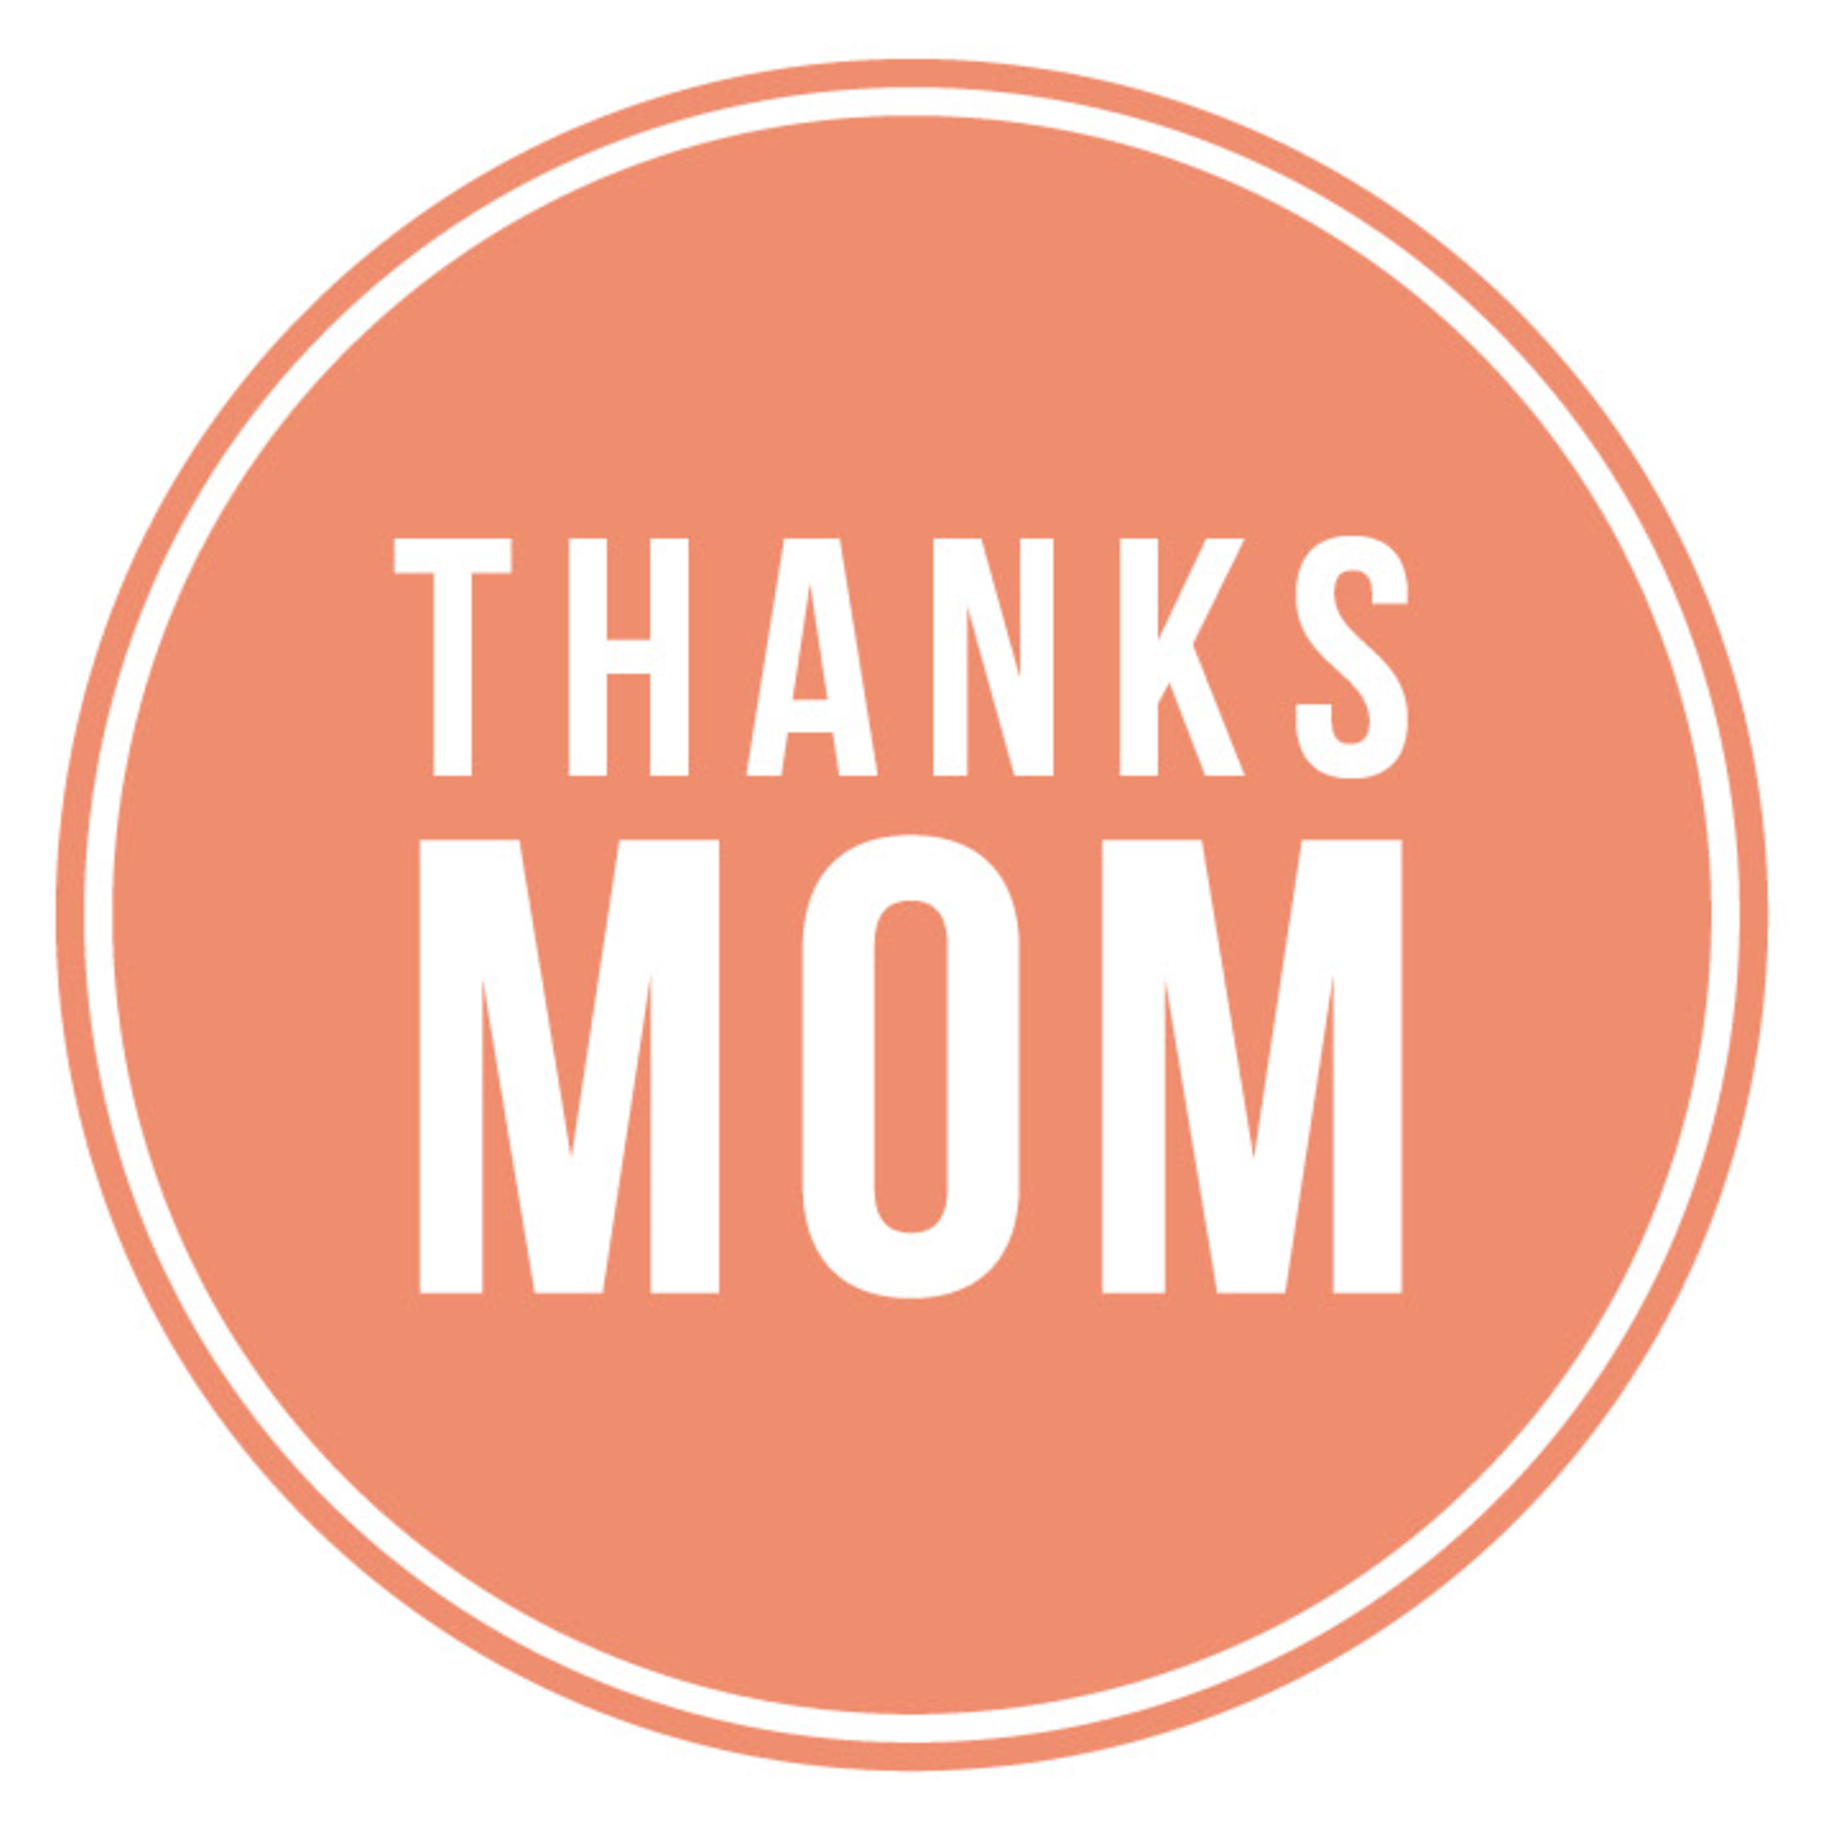 Thank mother. Thank you mom. Thanks mom. Thank you mom ! Красивая надпись. Thank you PNG.